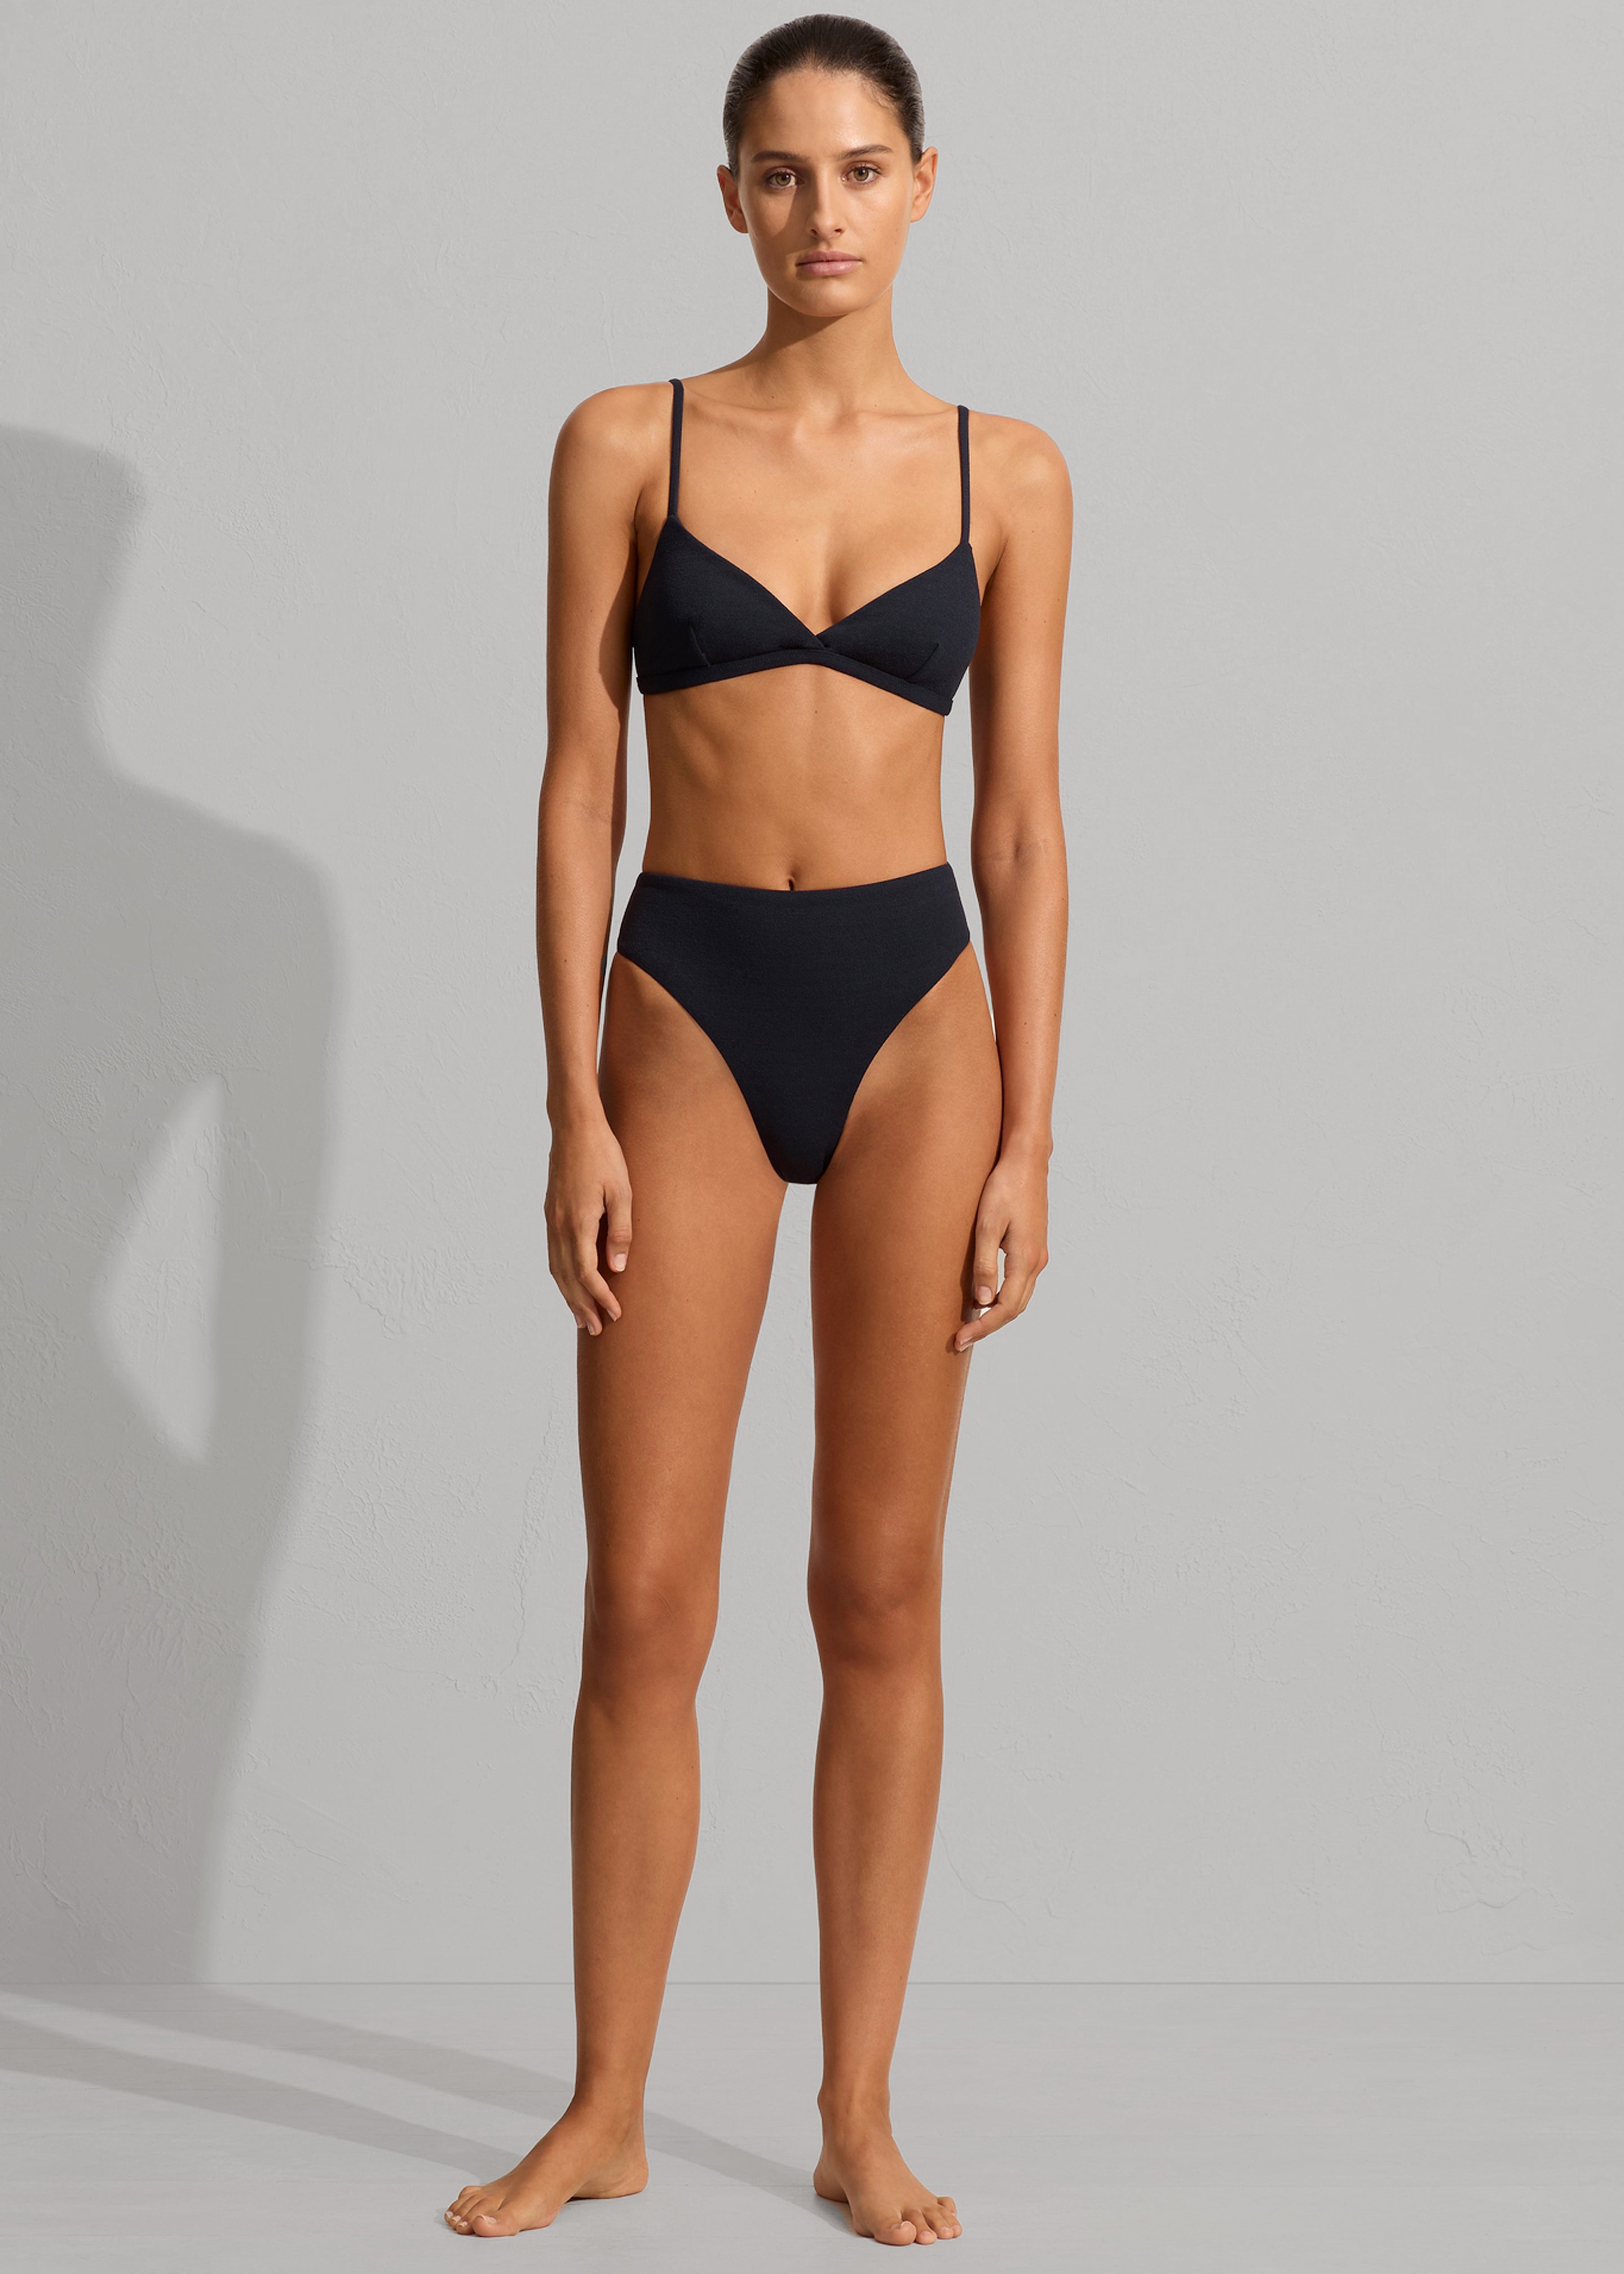 Matteau Tri Bikini Top - Navy Crinkle - 3